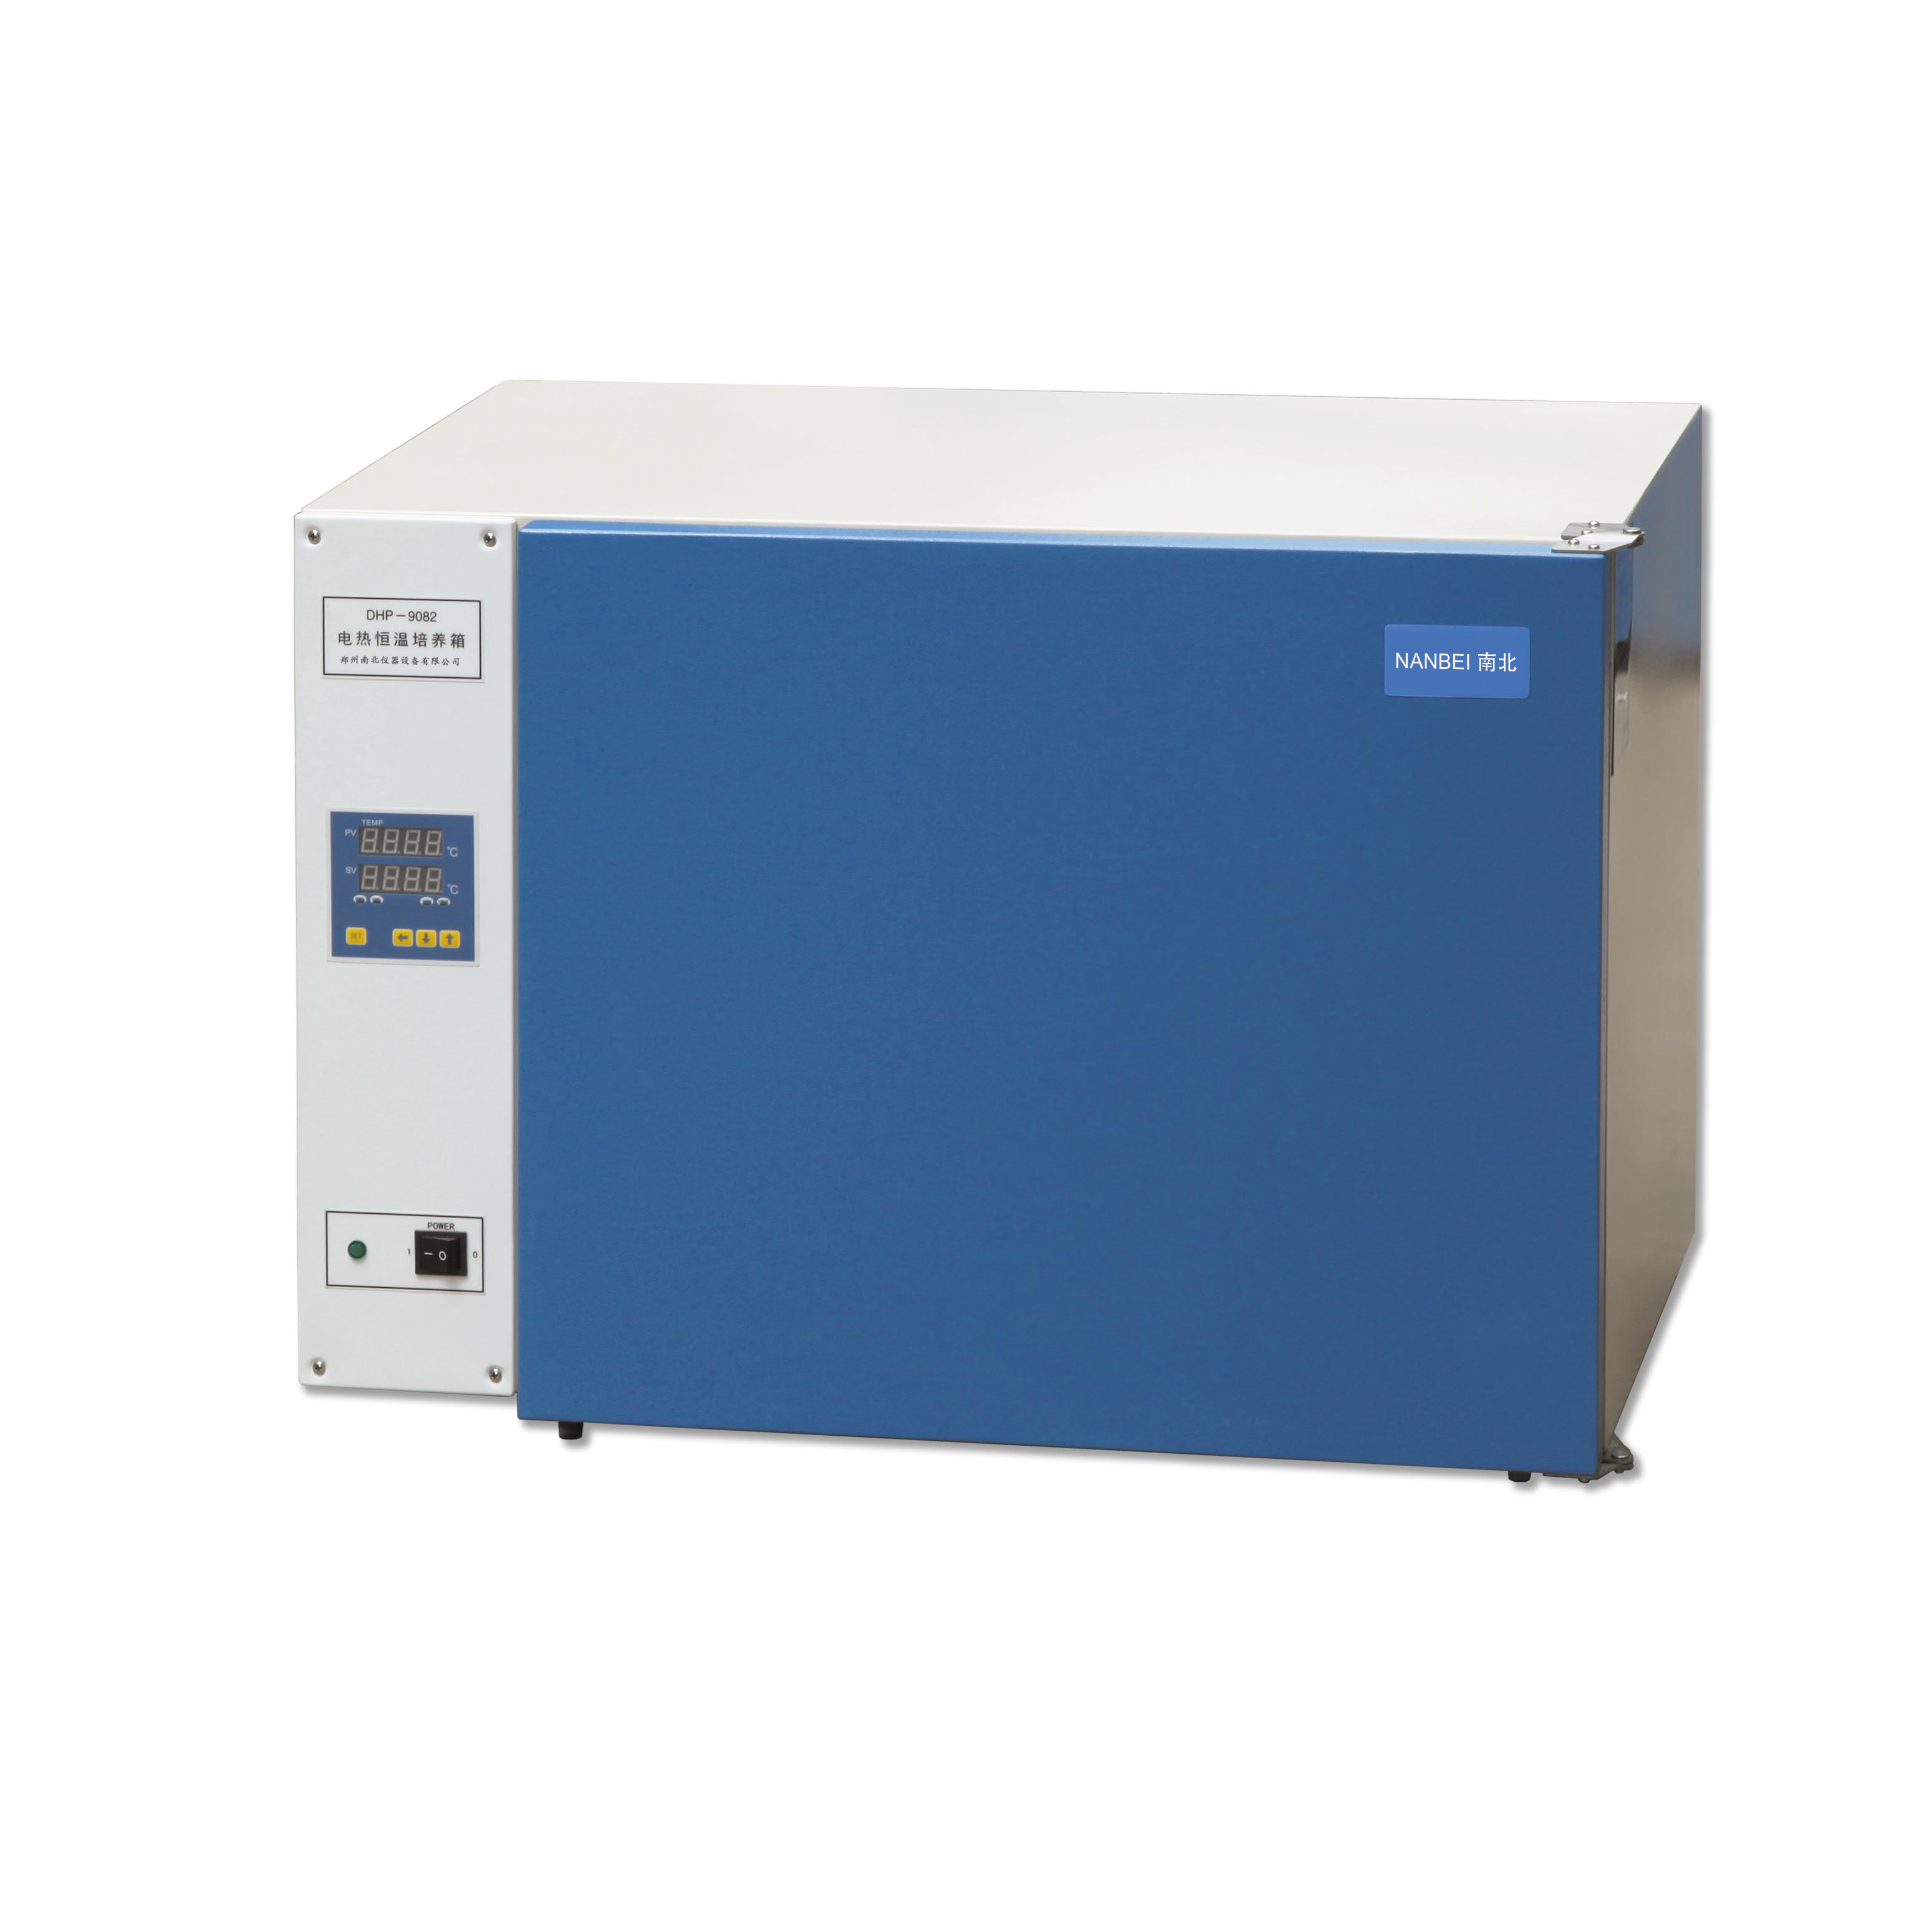 DHP-9082 Thermostatic incubator